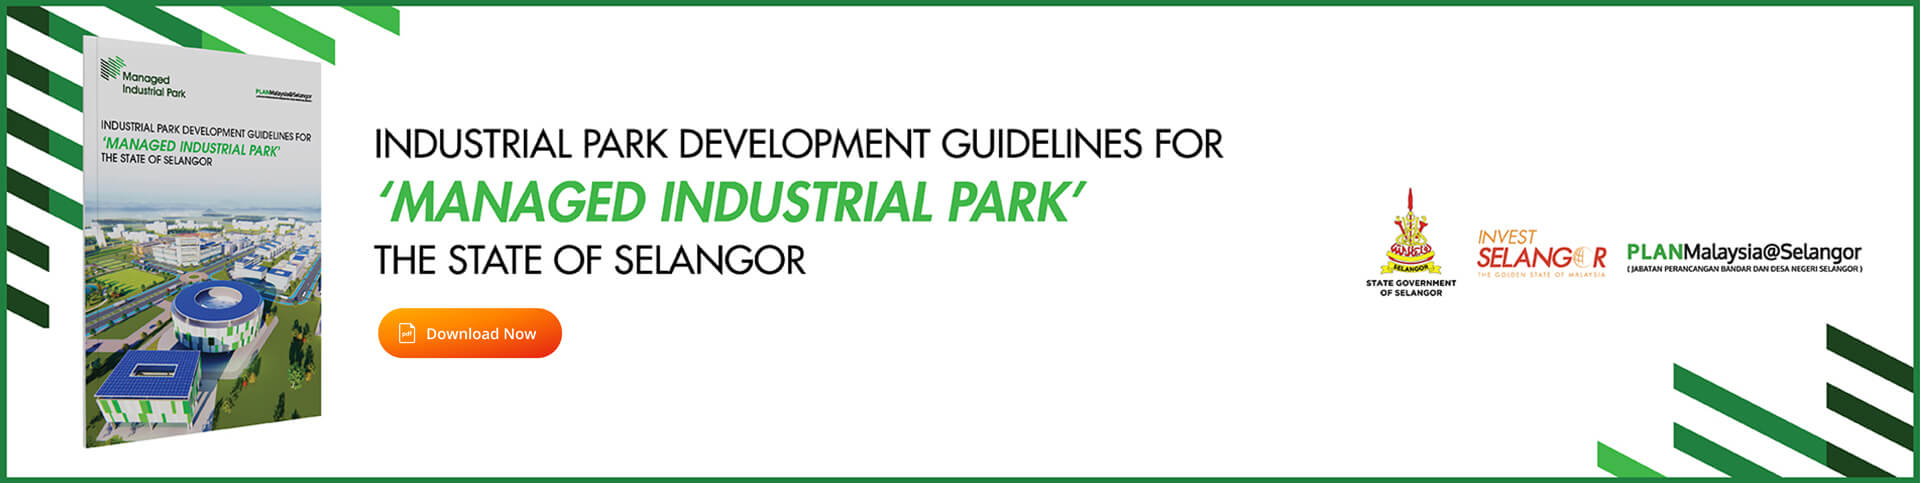 managed industrial park banner